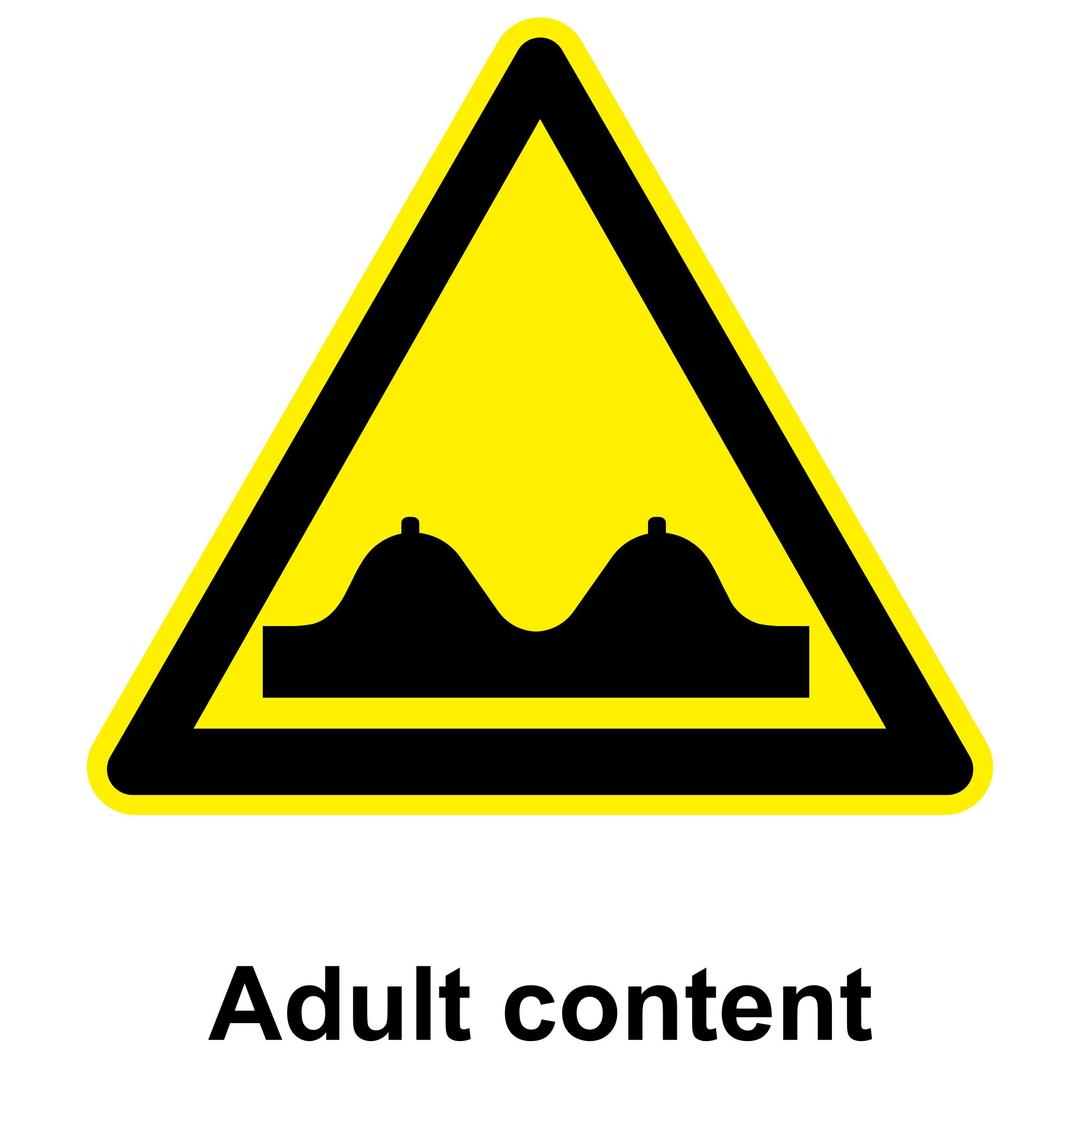 Adult content warning sign png transparent